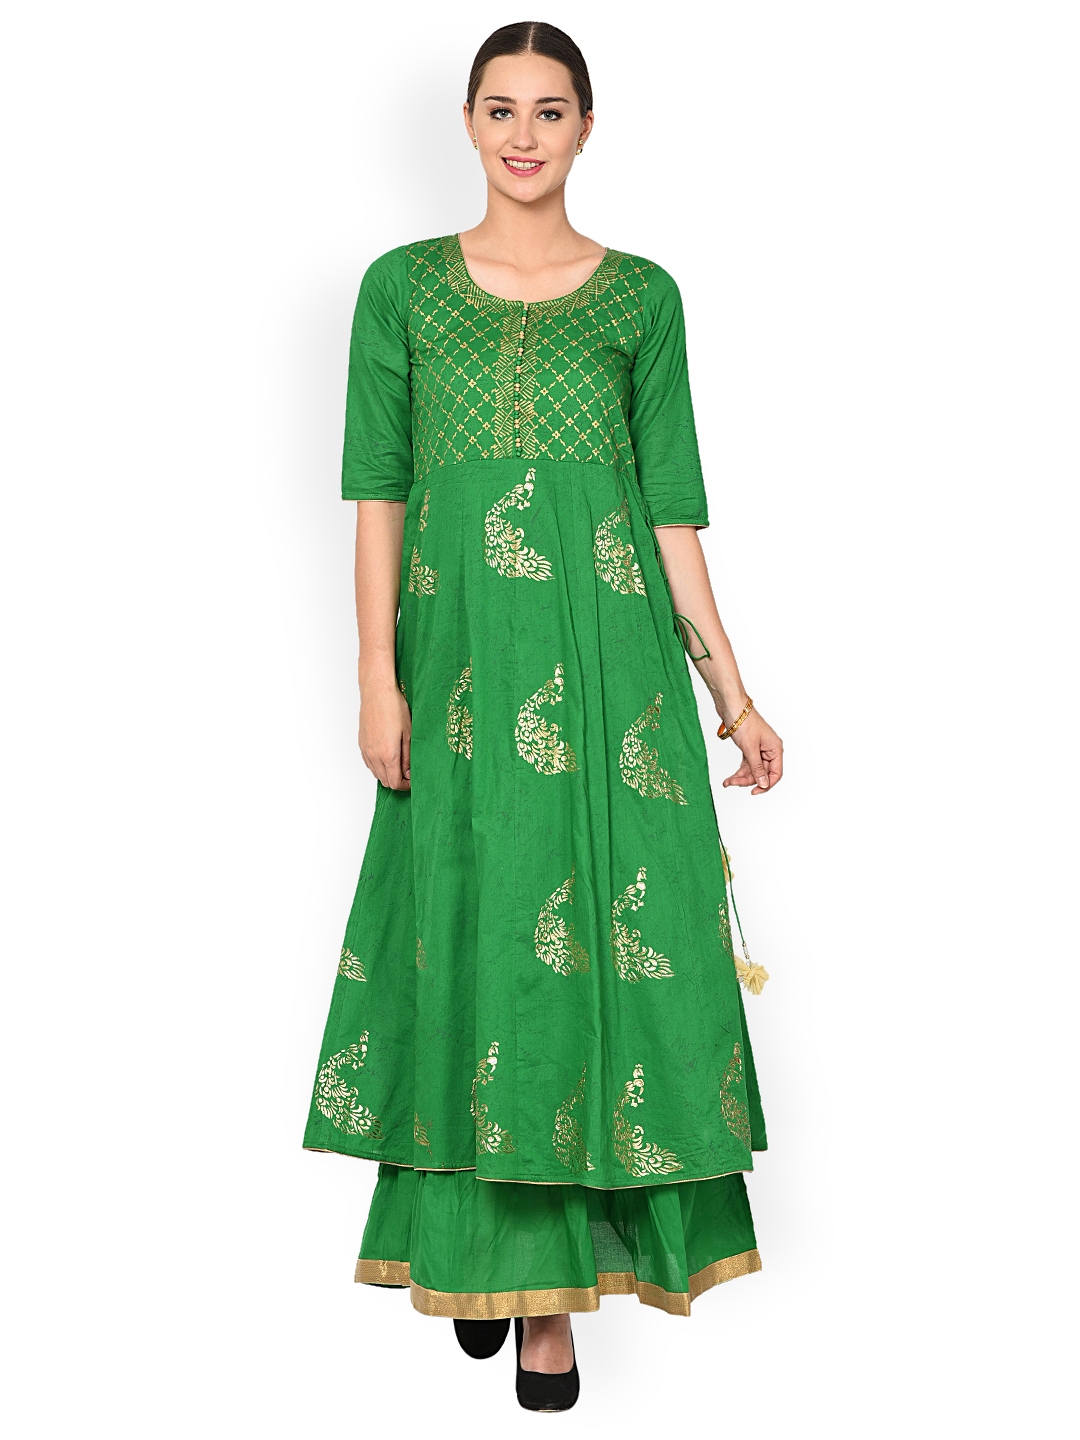 Shop Kids Green Frock Online in India  Princess Gown for Girl Online   wwwliandliin